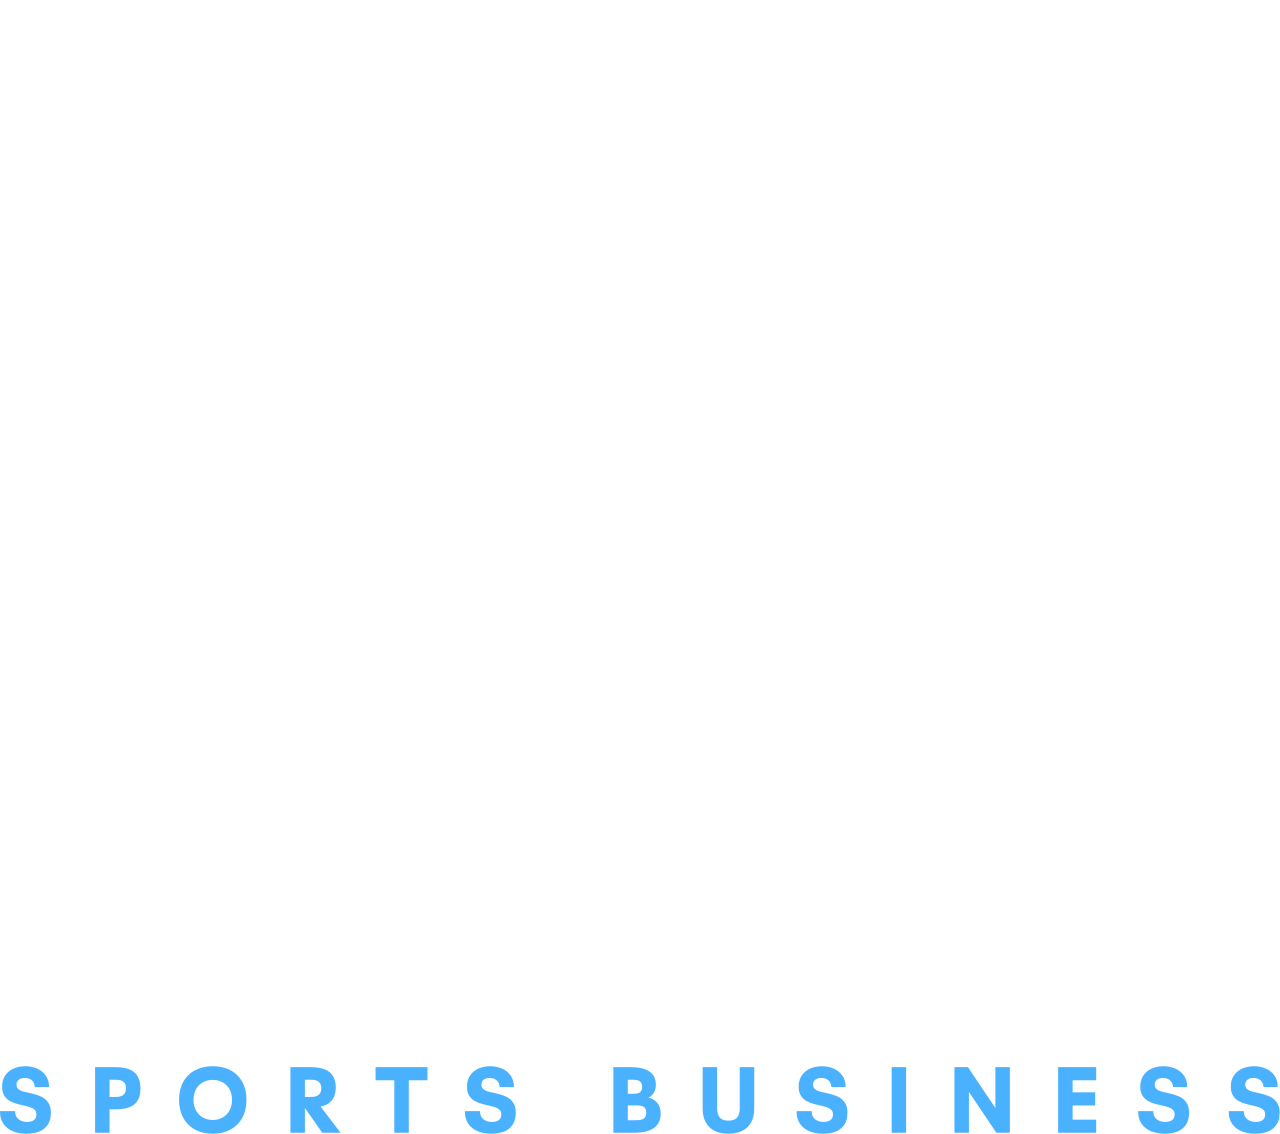 Cutait's logo